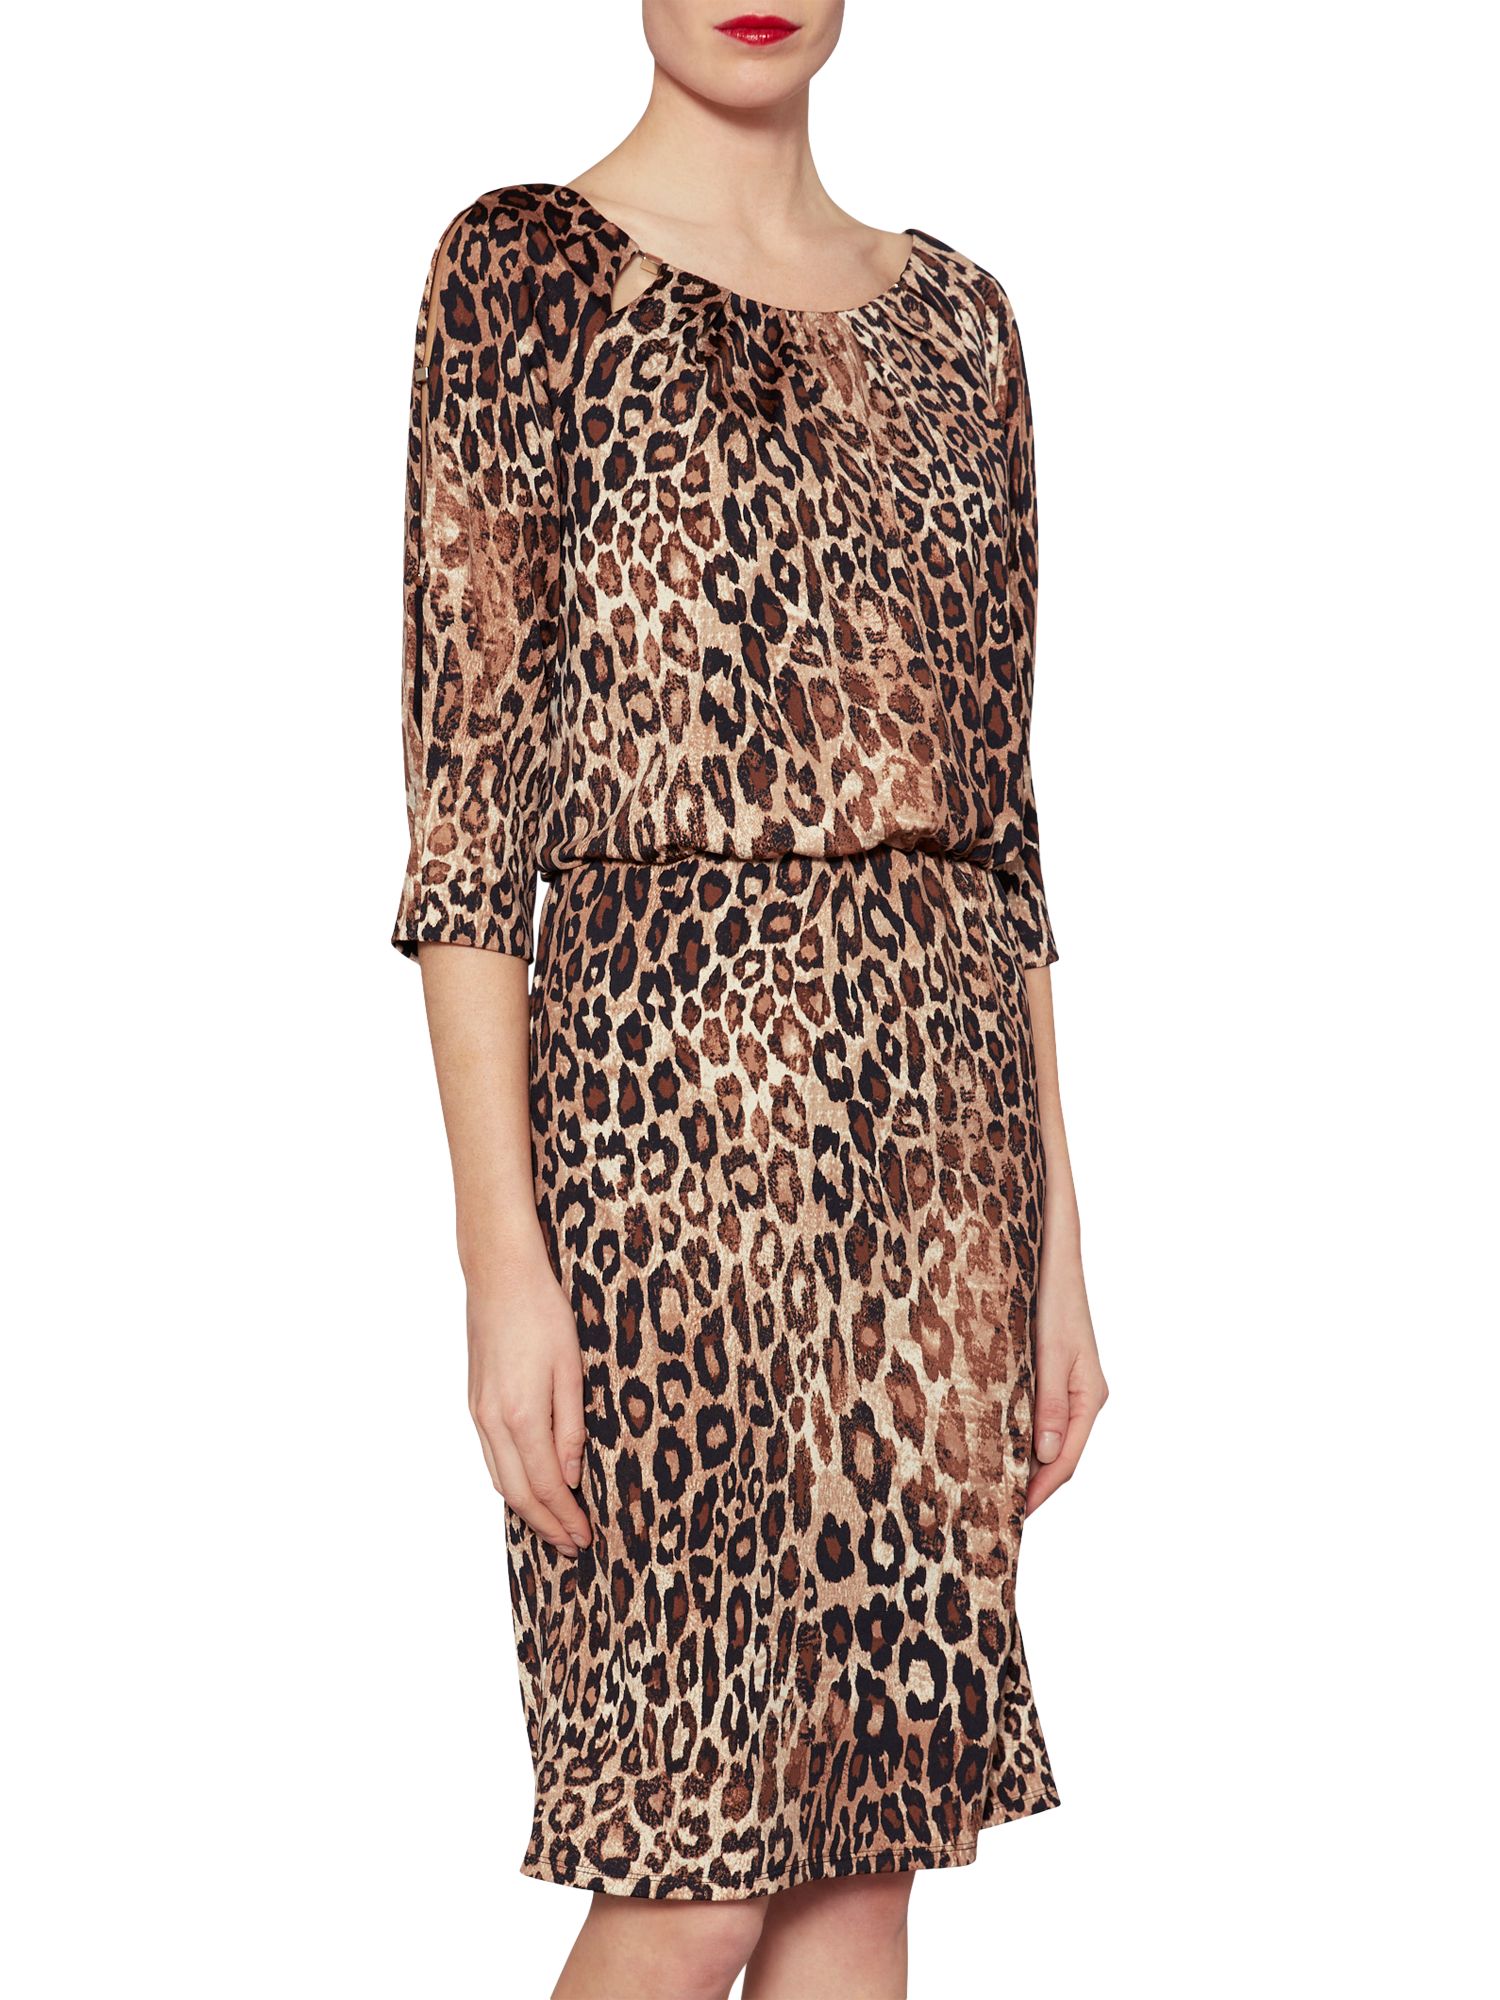 Gina Bacconi Ines Leopard Print Dress, Brown/Black at John Lewis & Partners